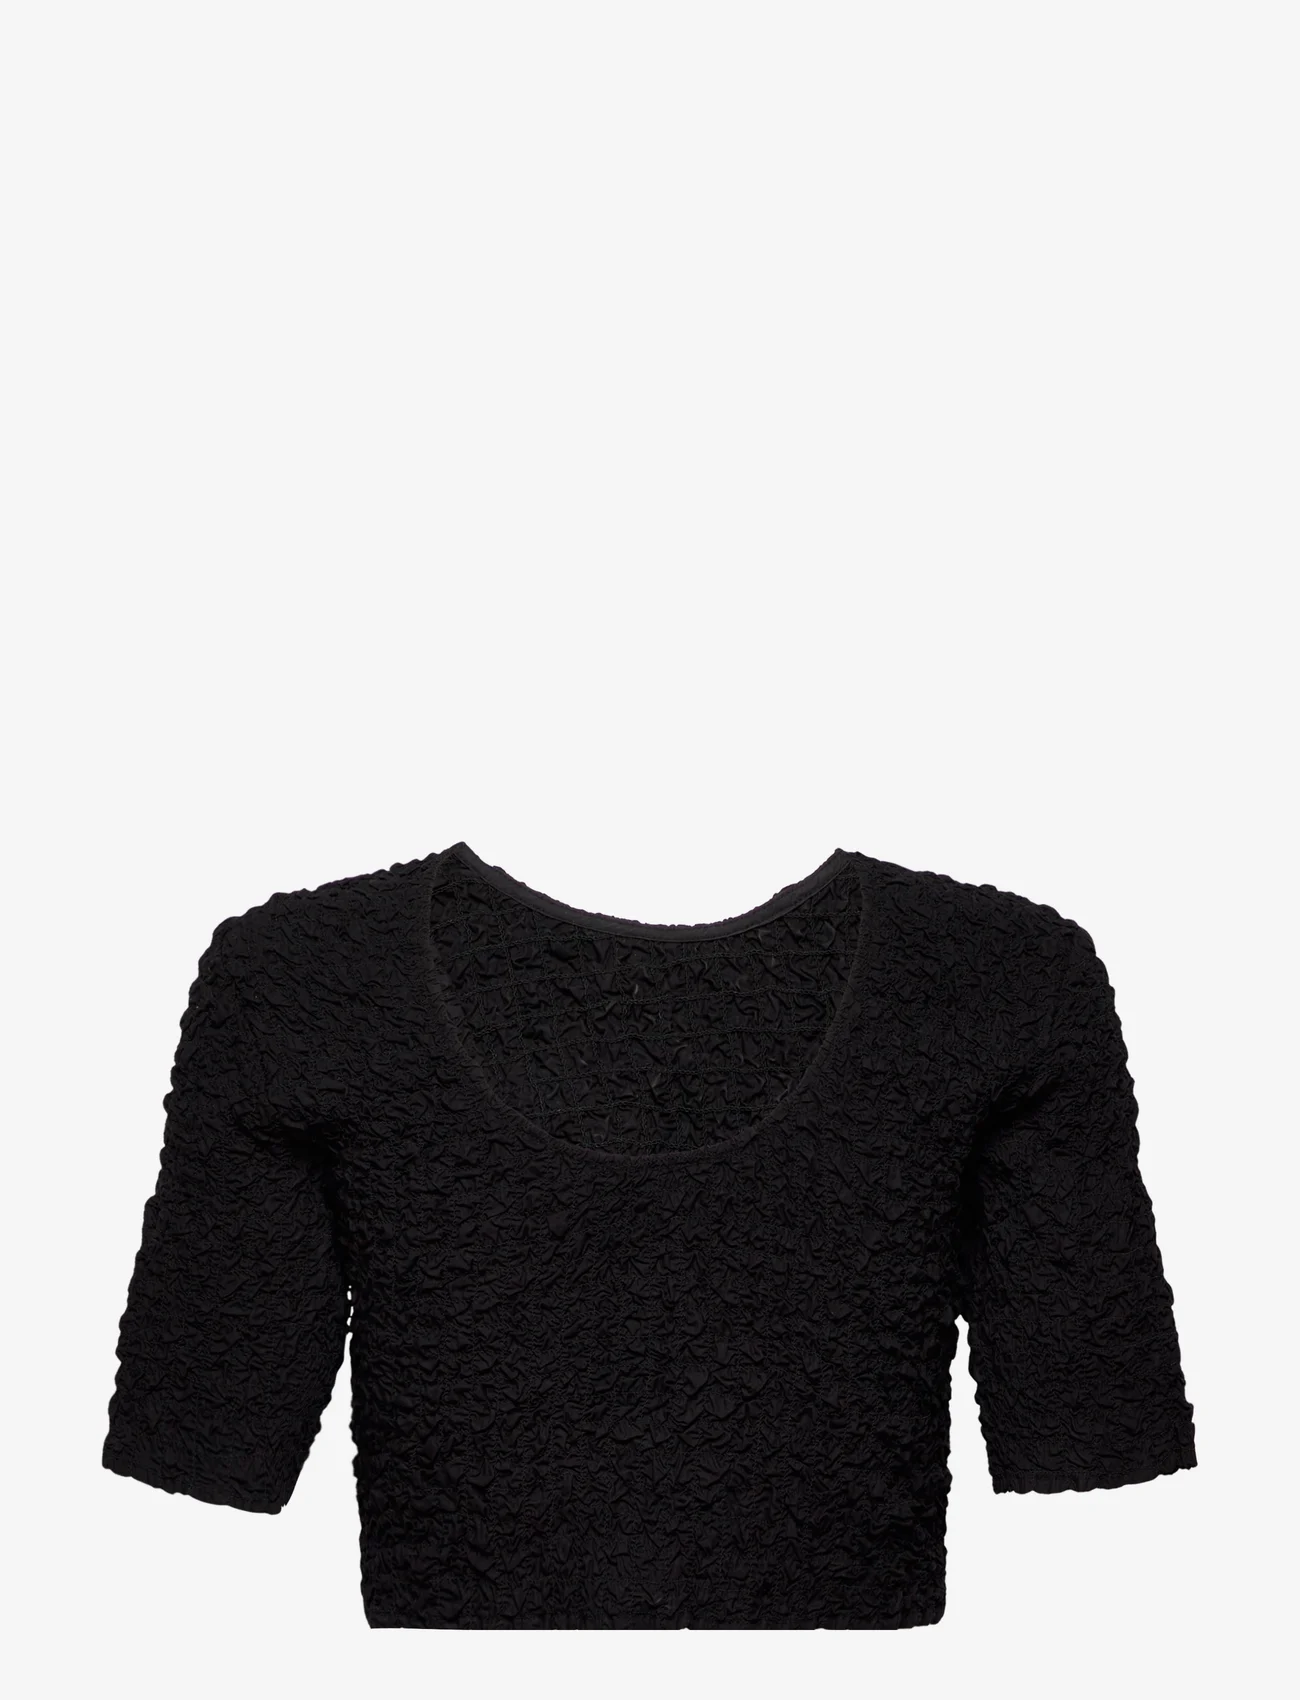 Ganni - Cotton Poplin - t-shirt & tops - black - 1